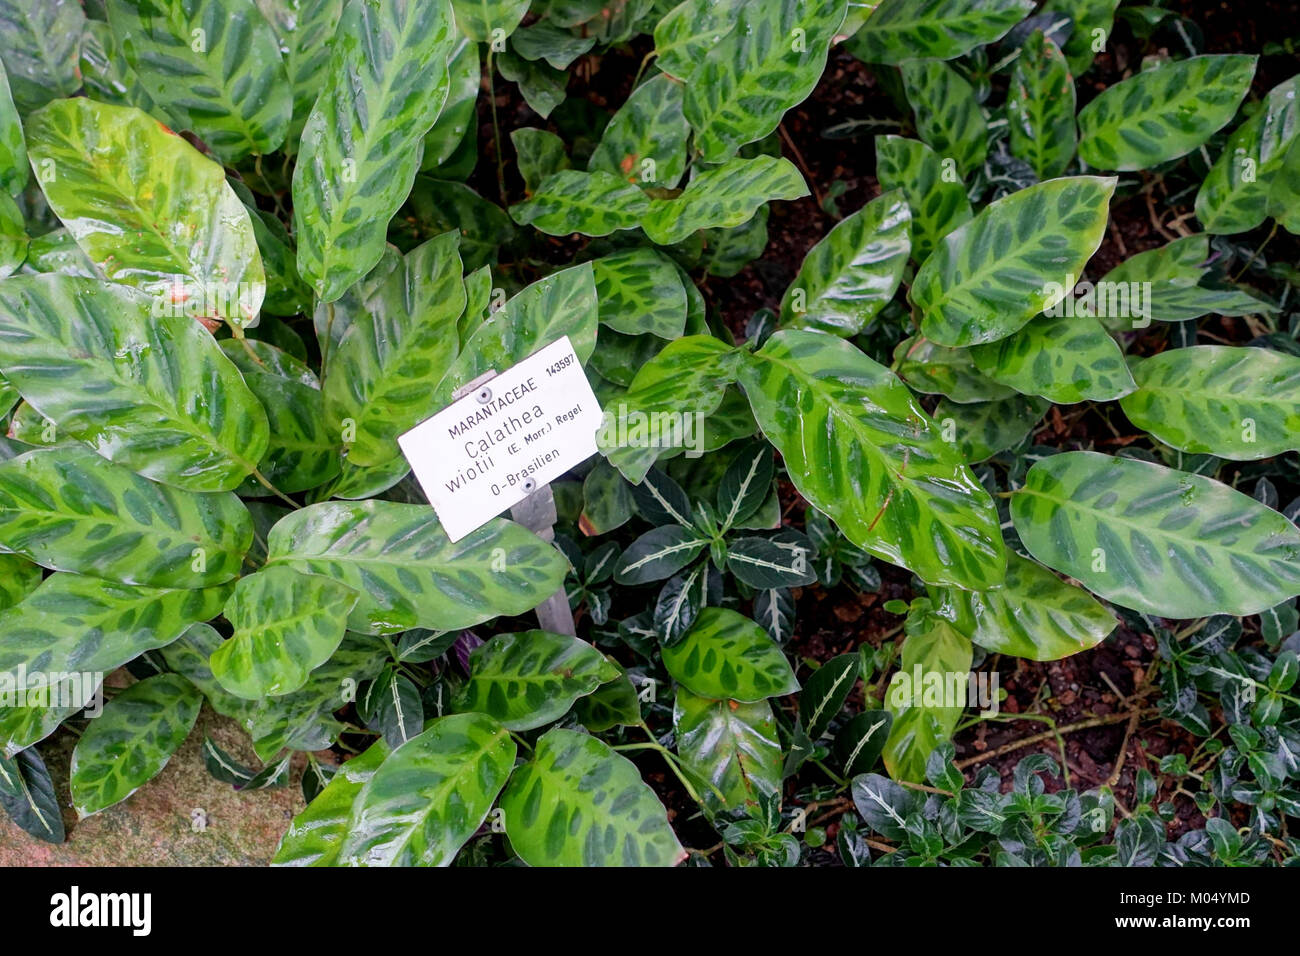 Calathea wiotii - Botanischer Garten - Heidelberg, Germany - DSC01077 Stock Photo